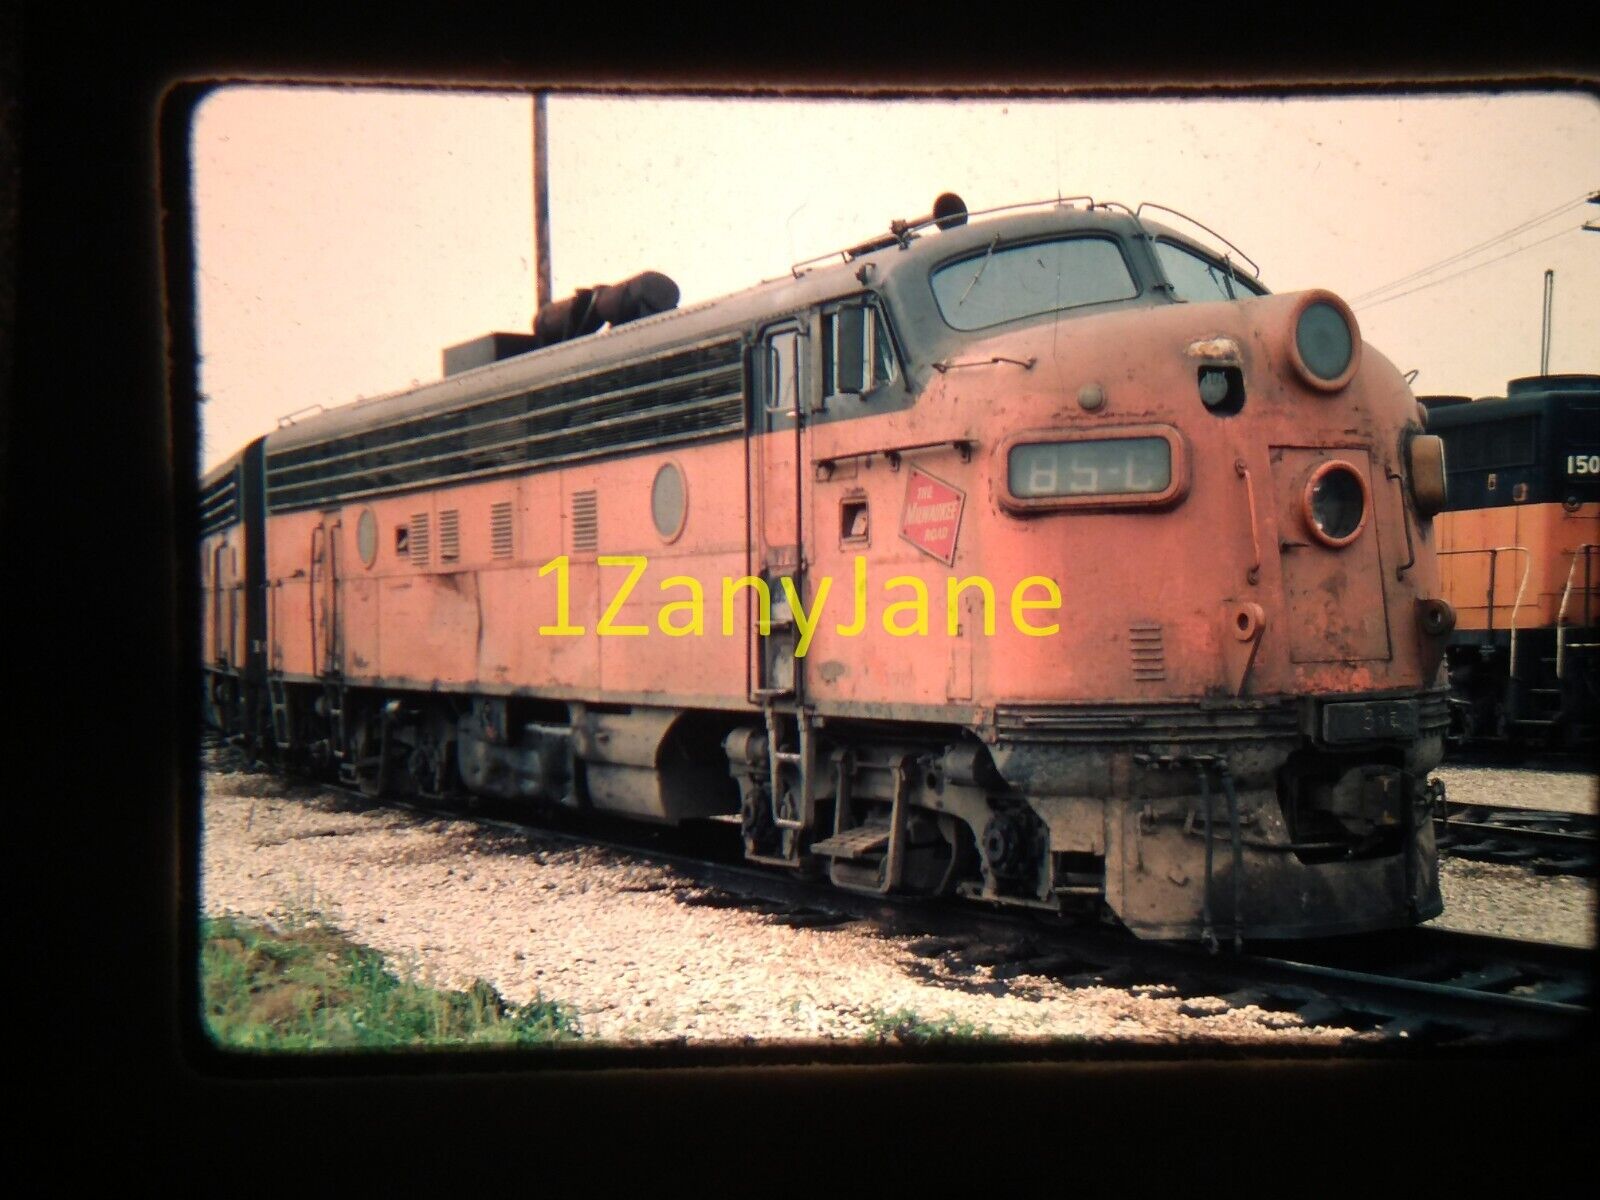 IA07 35MM TRAIN SLIDE Photo Engine Locomotive MILW 85, SAVANA, IL, 1976